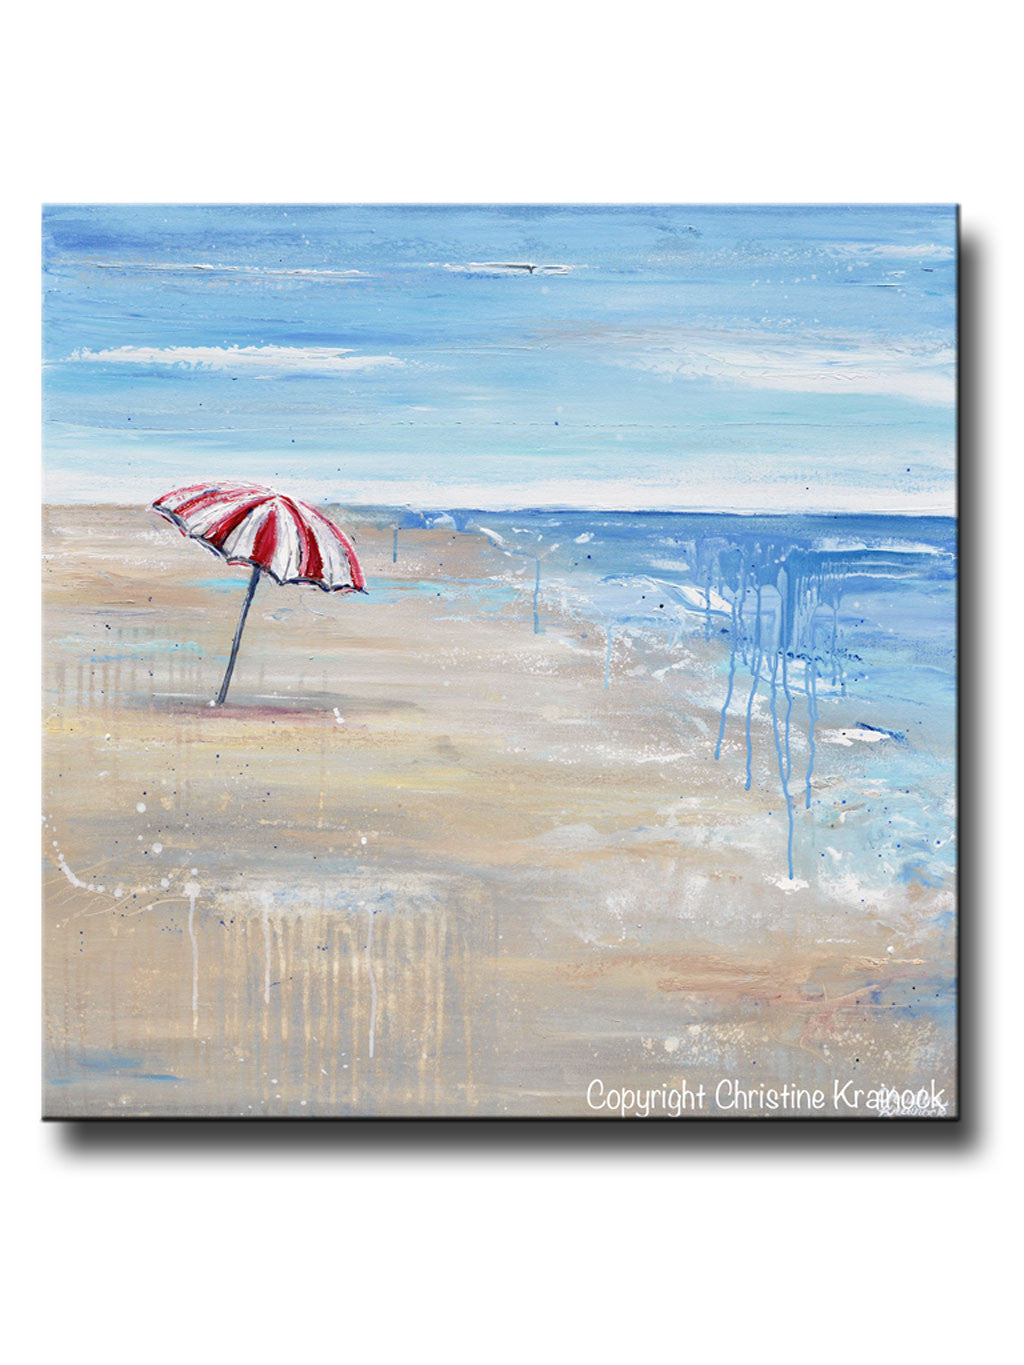 ORIGINAL Art Abstract Painting Seascape Red Beach Umbrella Ocean Blue Coastal Wall Decor 36x36"